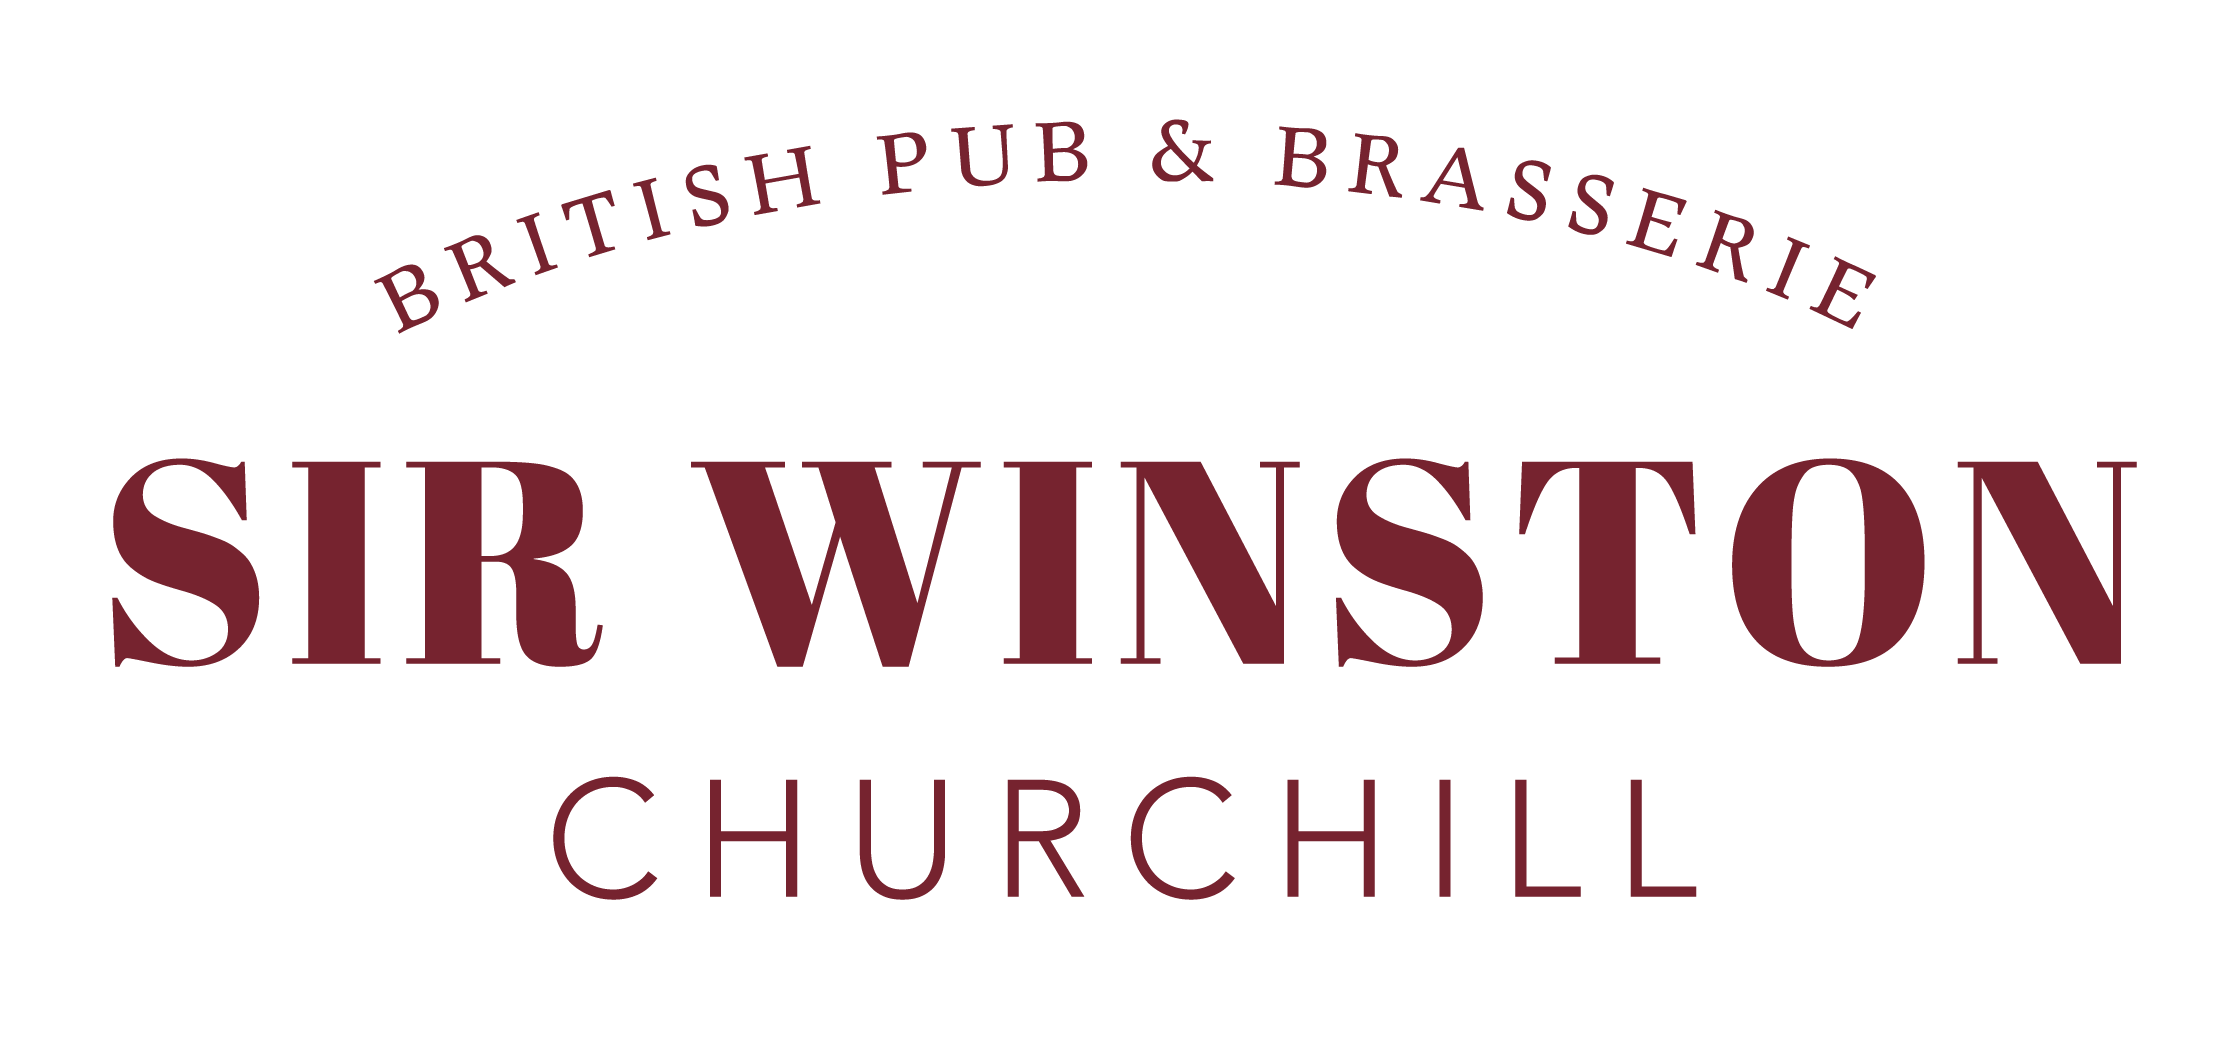 Logo Sir Winston